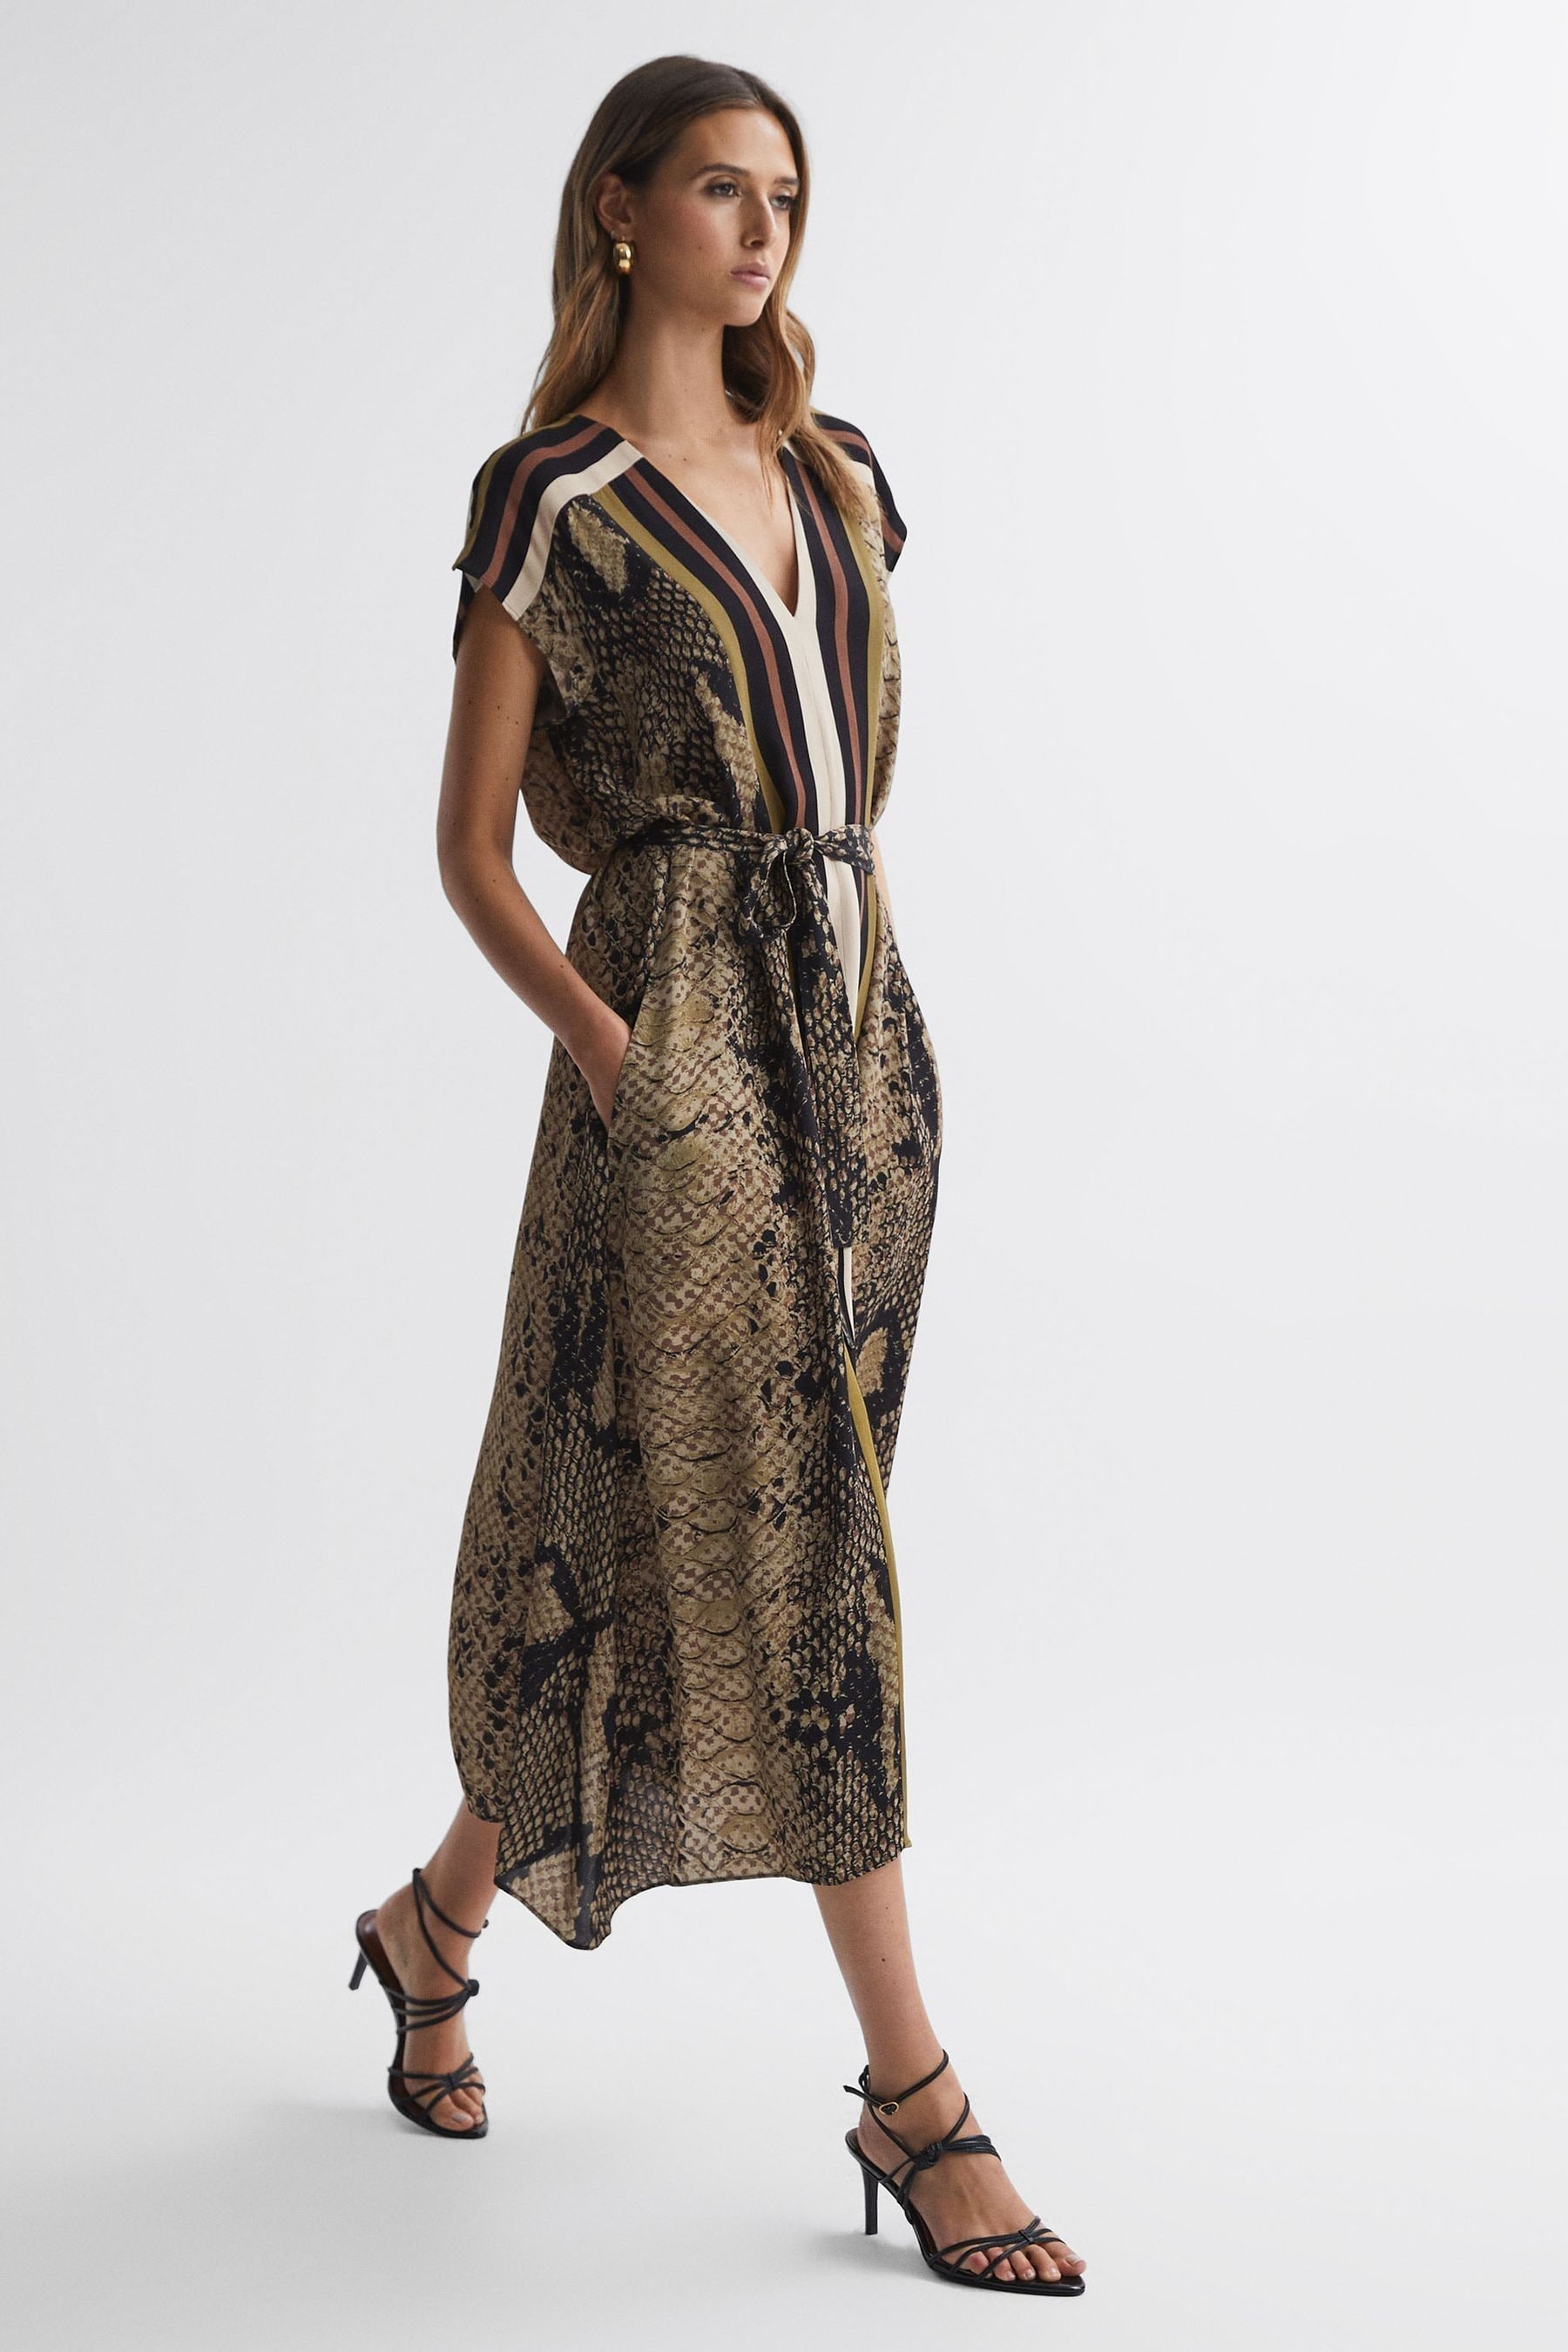 Reiss Bea - Brown Snake Print Midi Dress, Us 8